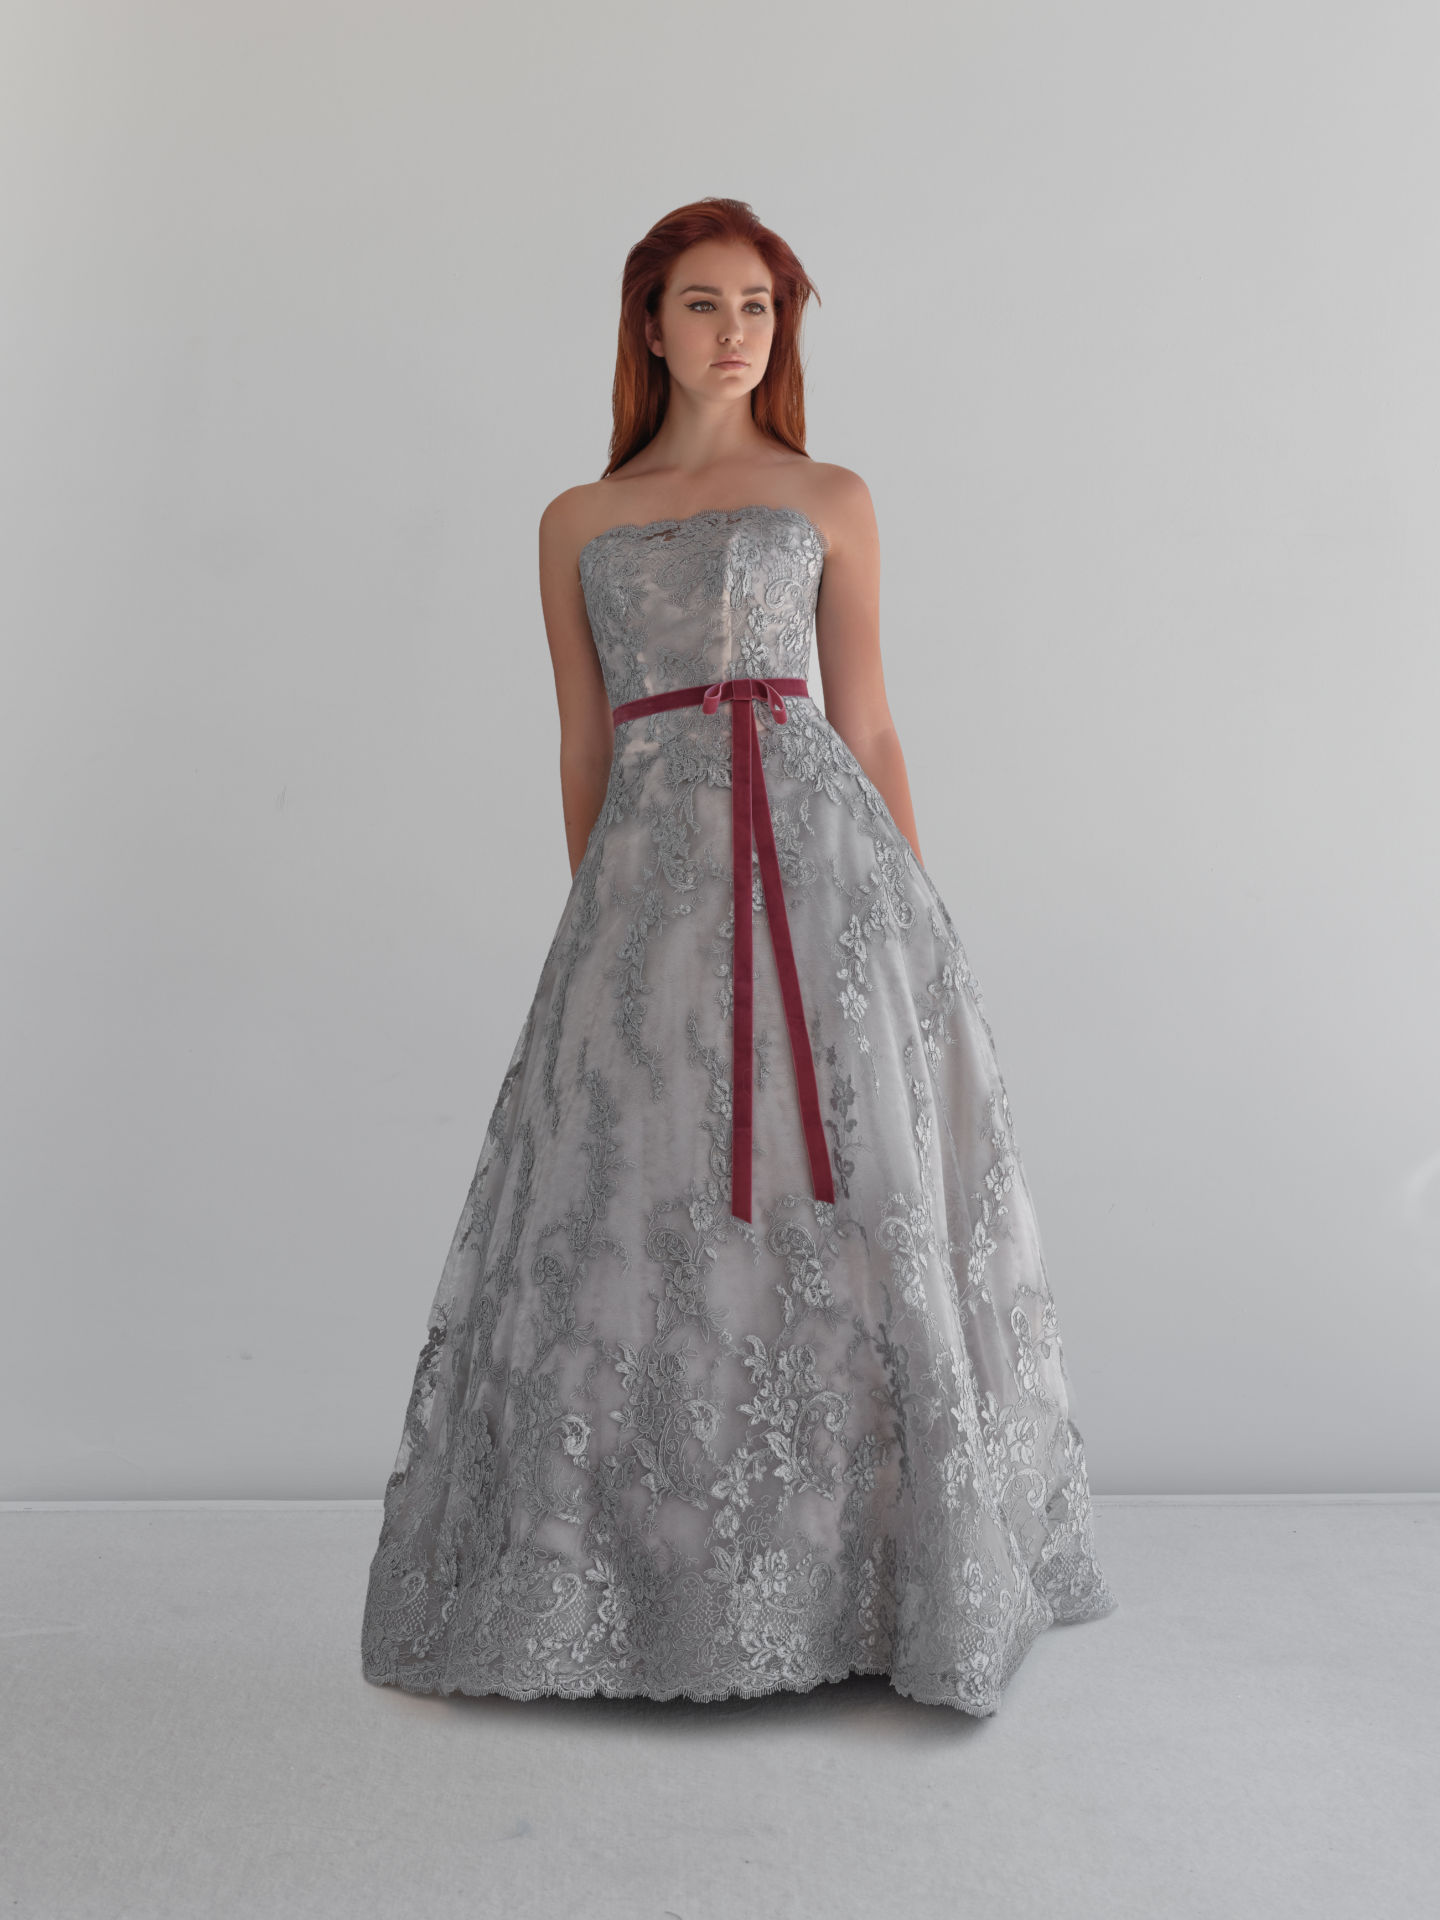 CRISTALLE | ROSANNA PERRONE | granmanie | wedding dress | gray